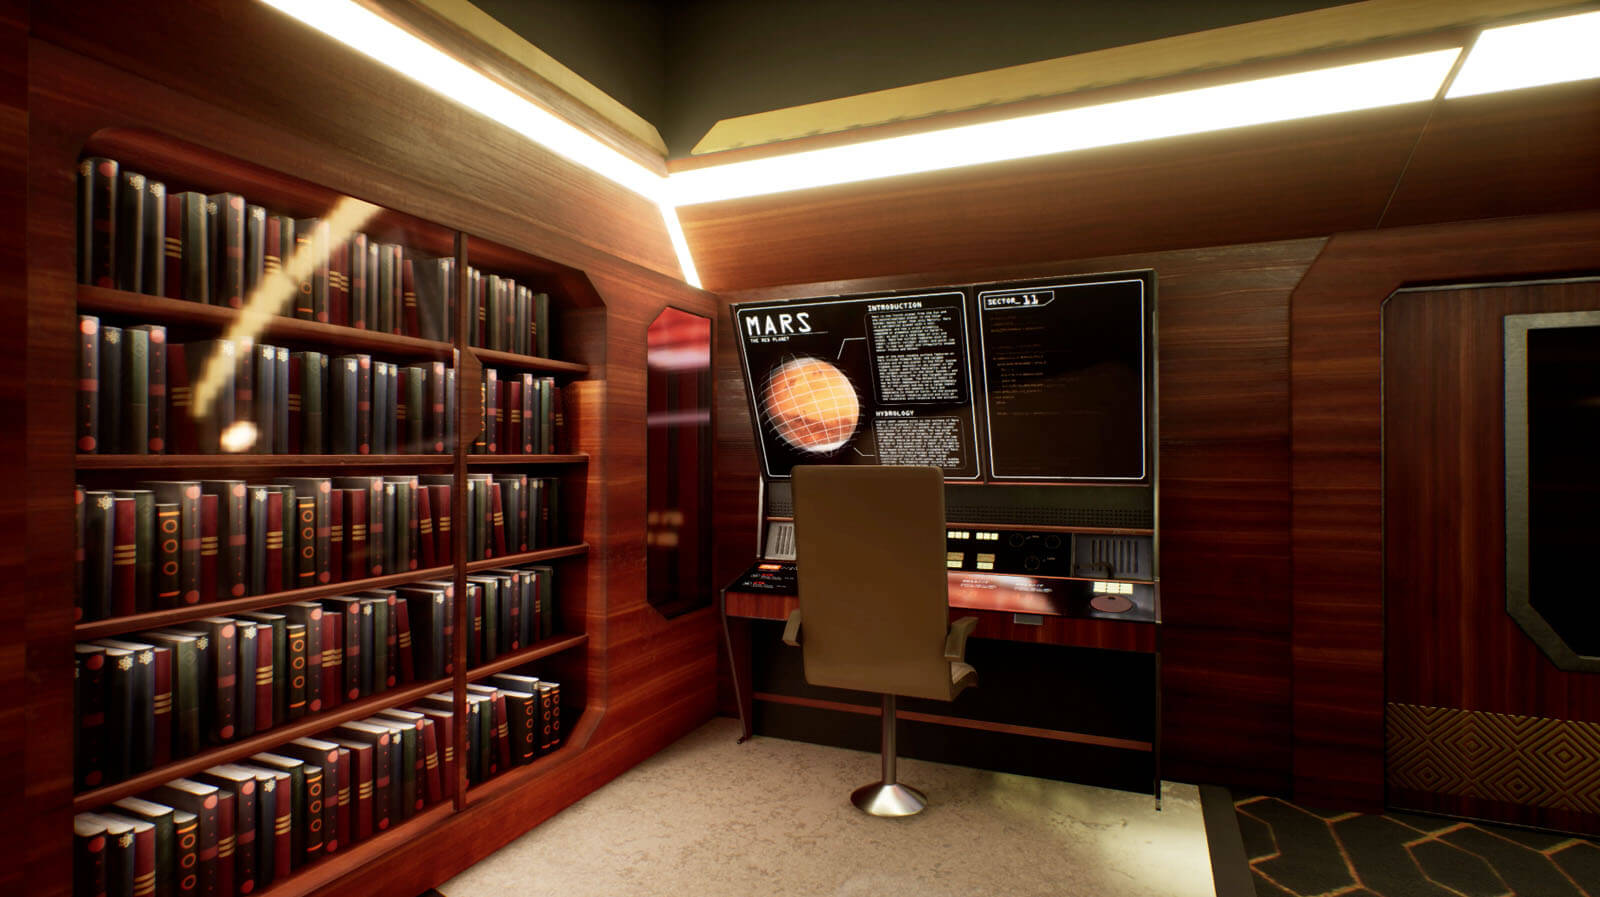 A large screen at a futuristic desk displays the words 'Mars' aboard a futuristic ship